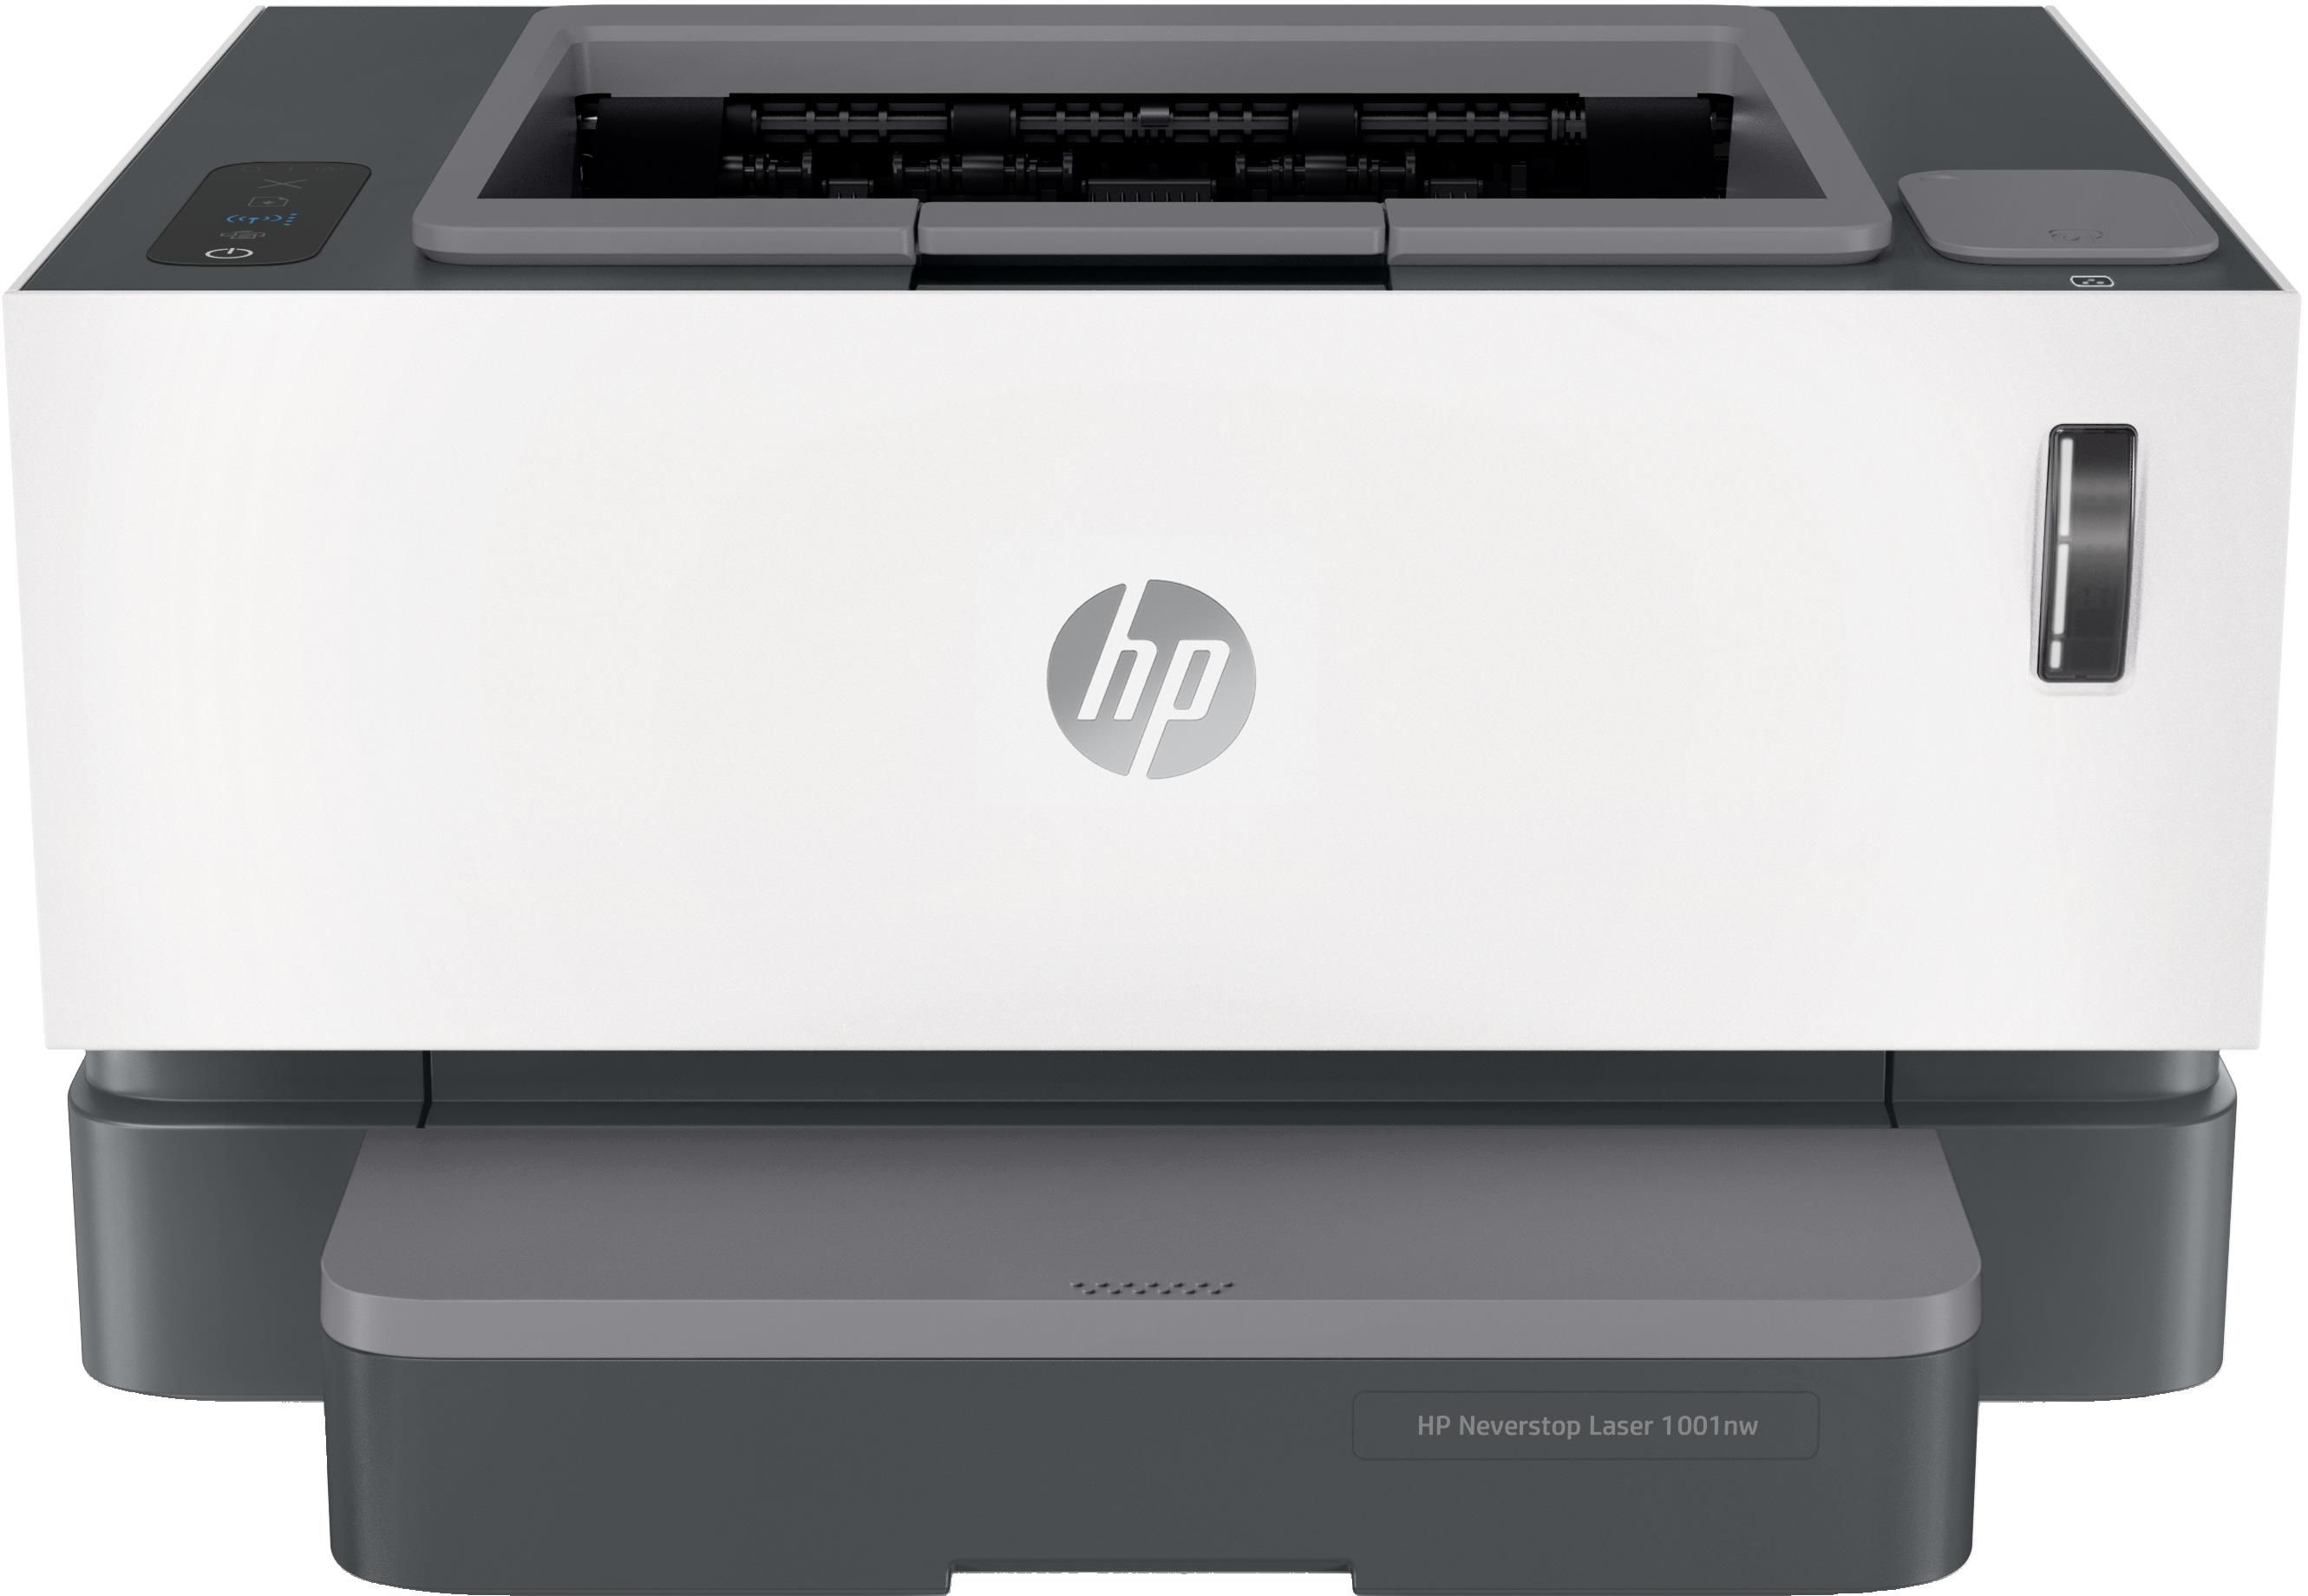 HP LaserJet Neverstop 1001nw